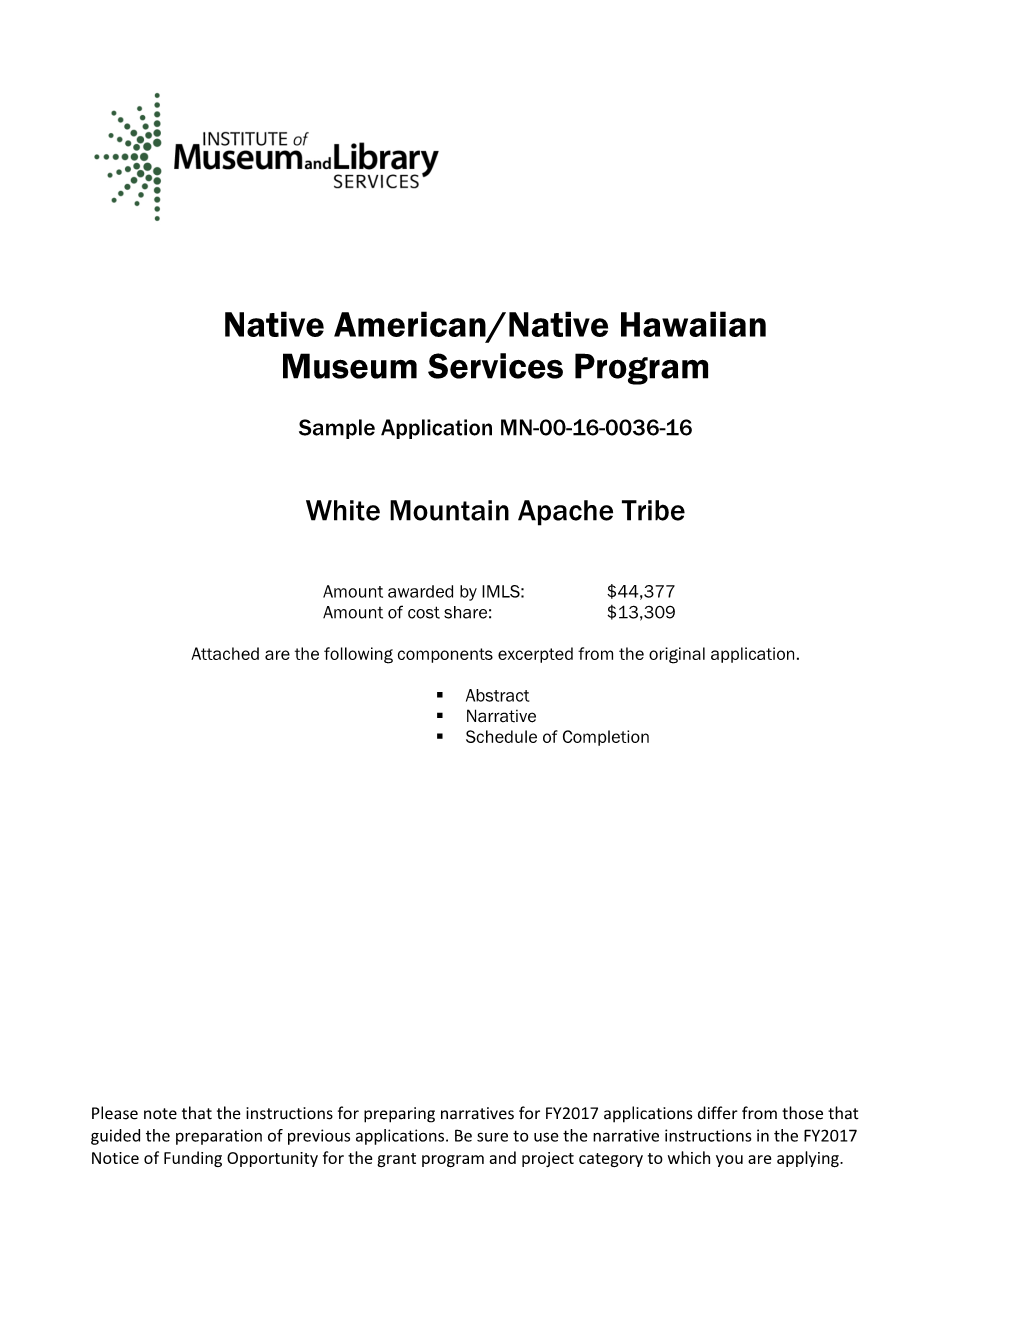 Native American/Native Hawaiian Museum Services Program